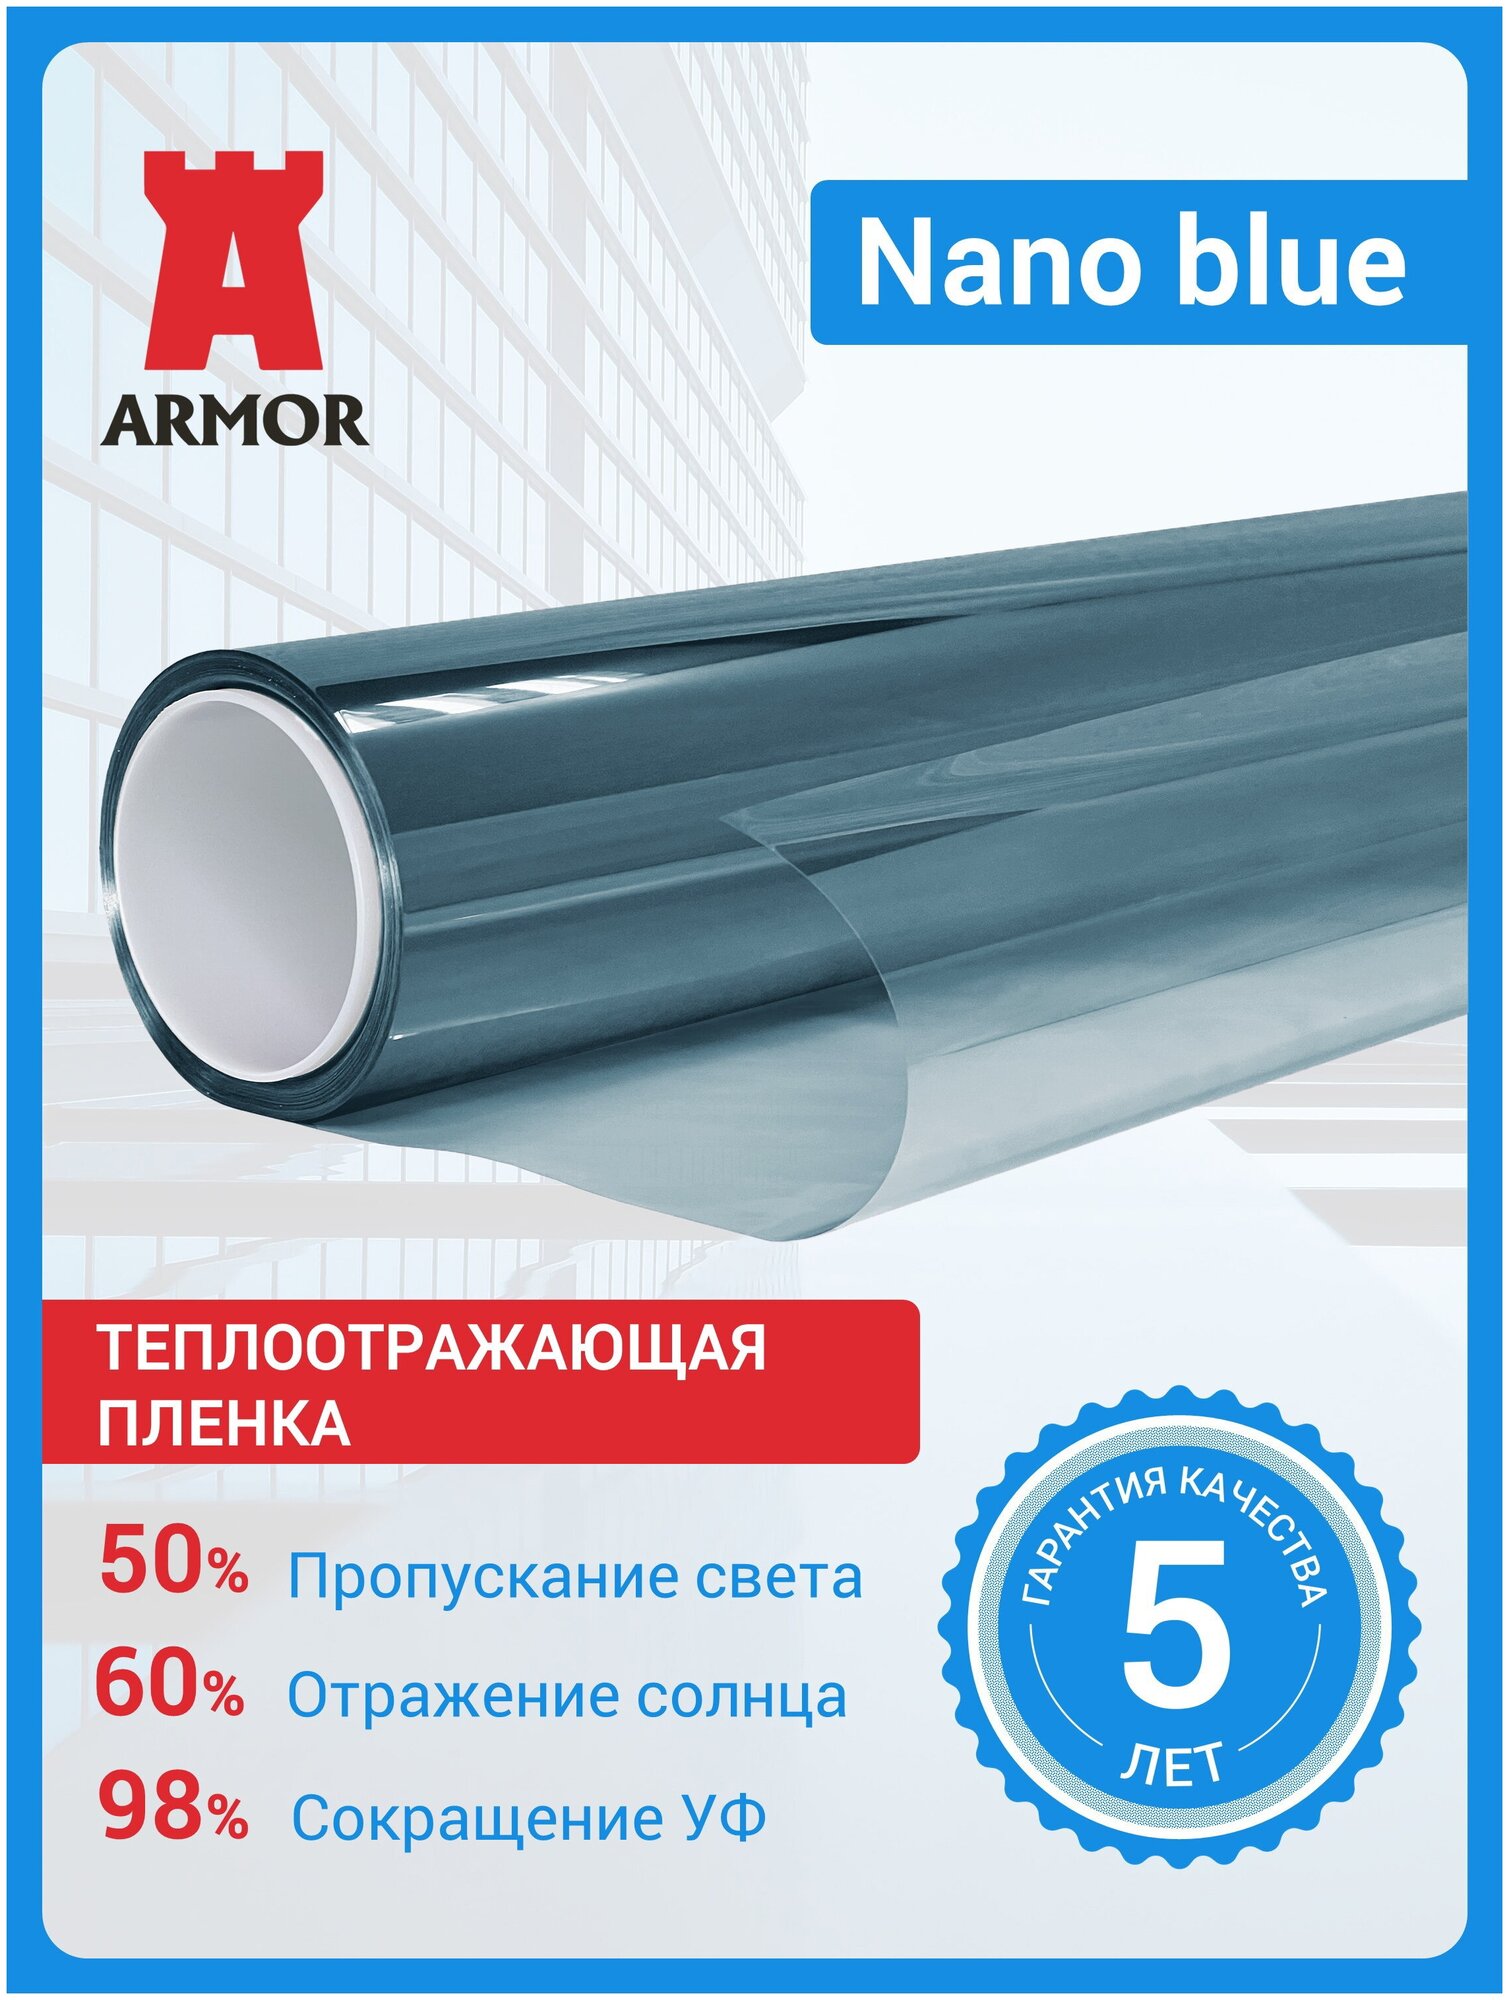 Самоклеящаяся теплоотражающая пленка для окон Nano Blue, цвет - голубой, размер 0,75 м. х 3 м. (75х300 см)